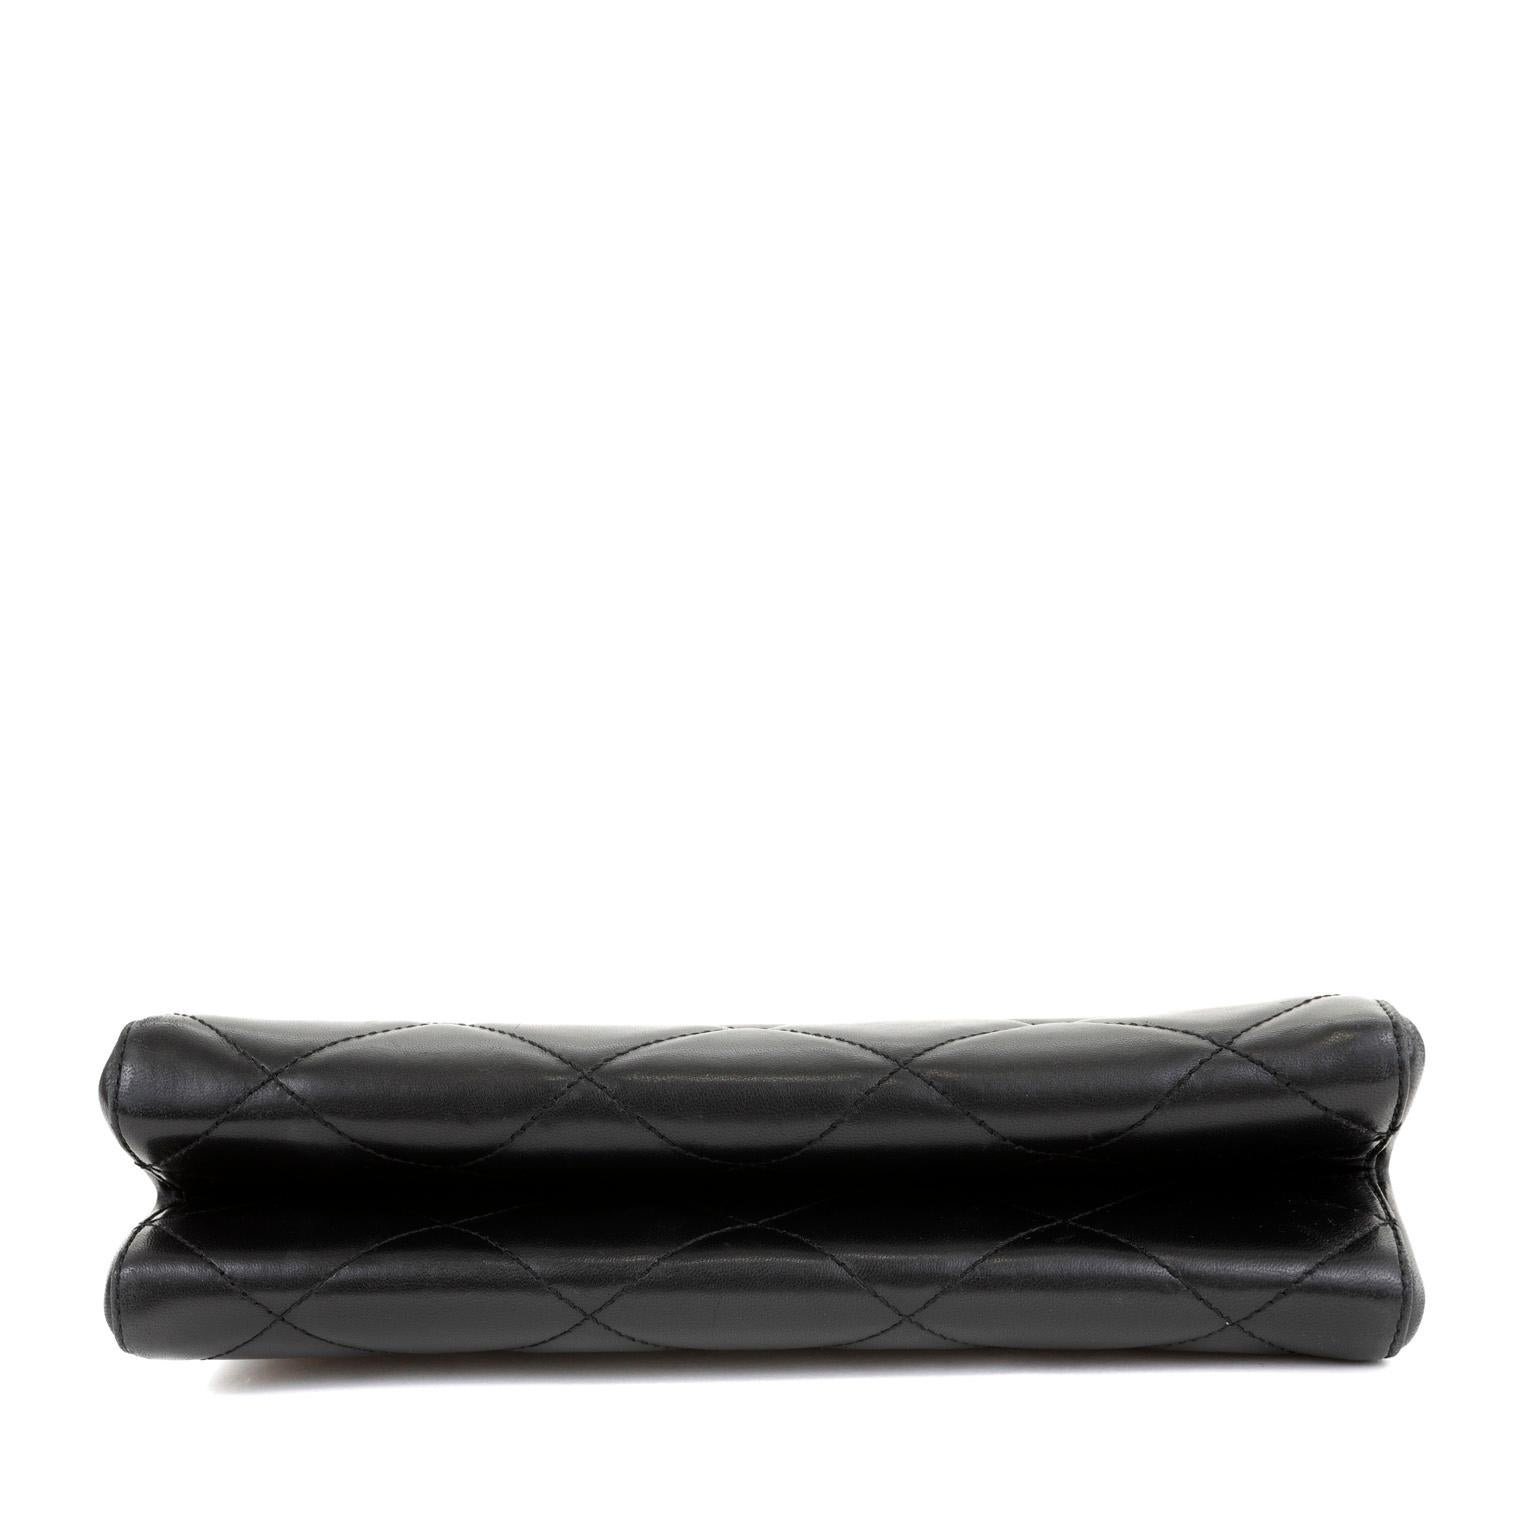 Chanel Black Quilted Leather Wood Framed Bag 1